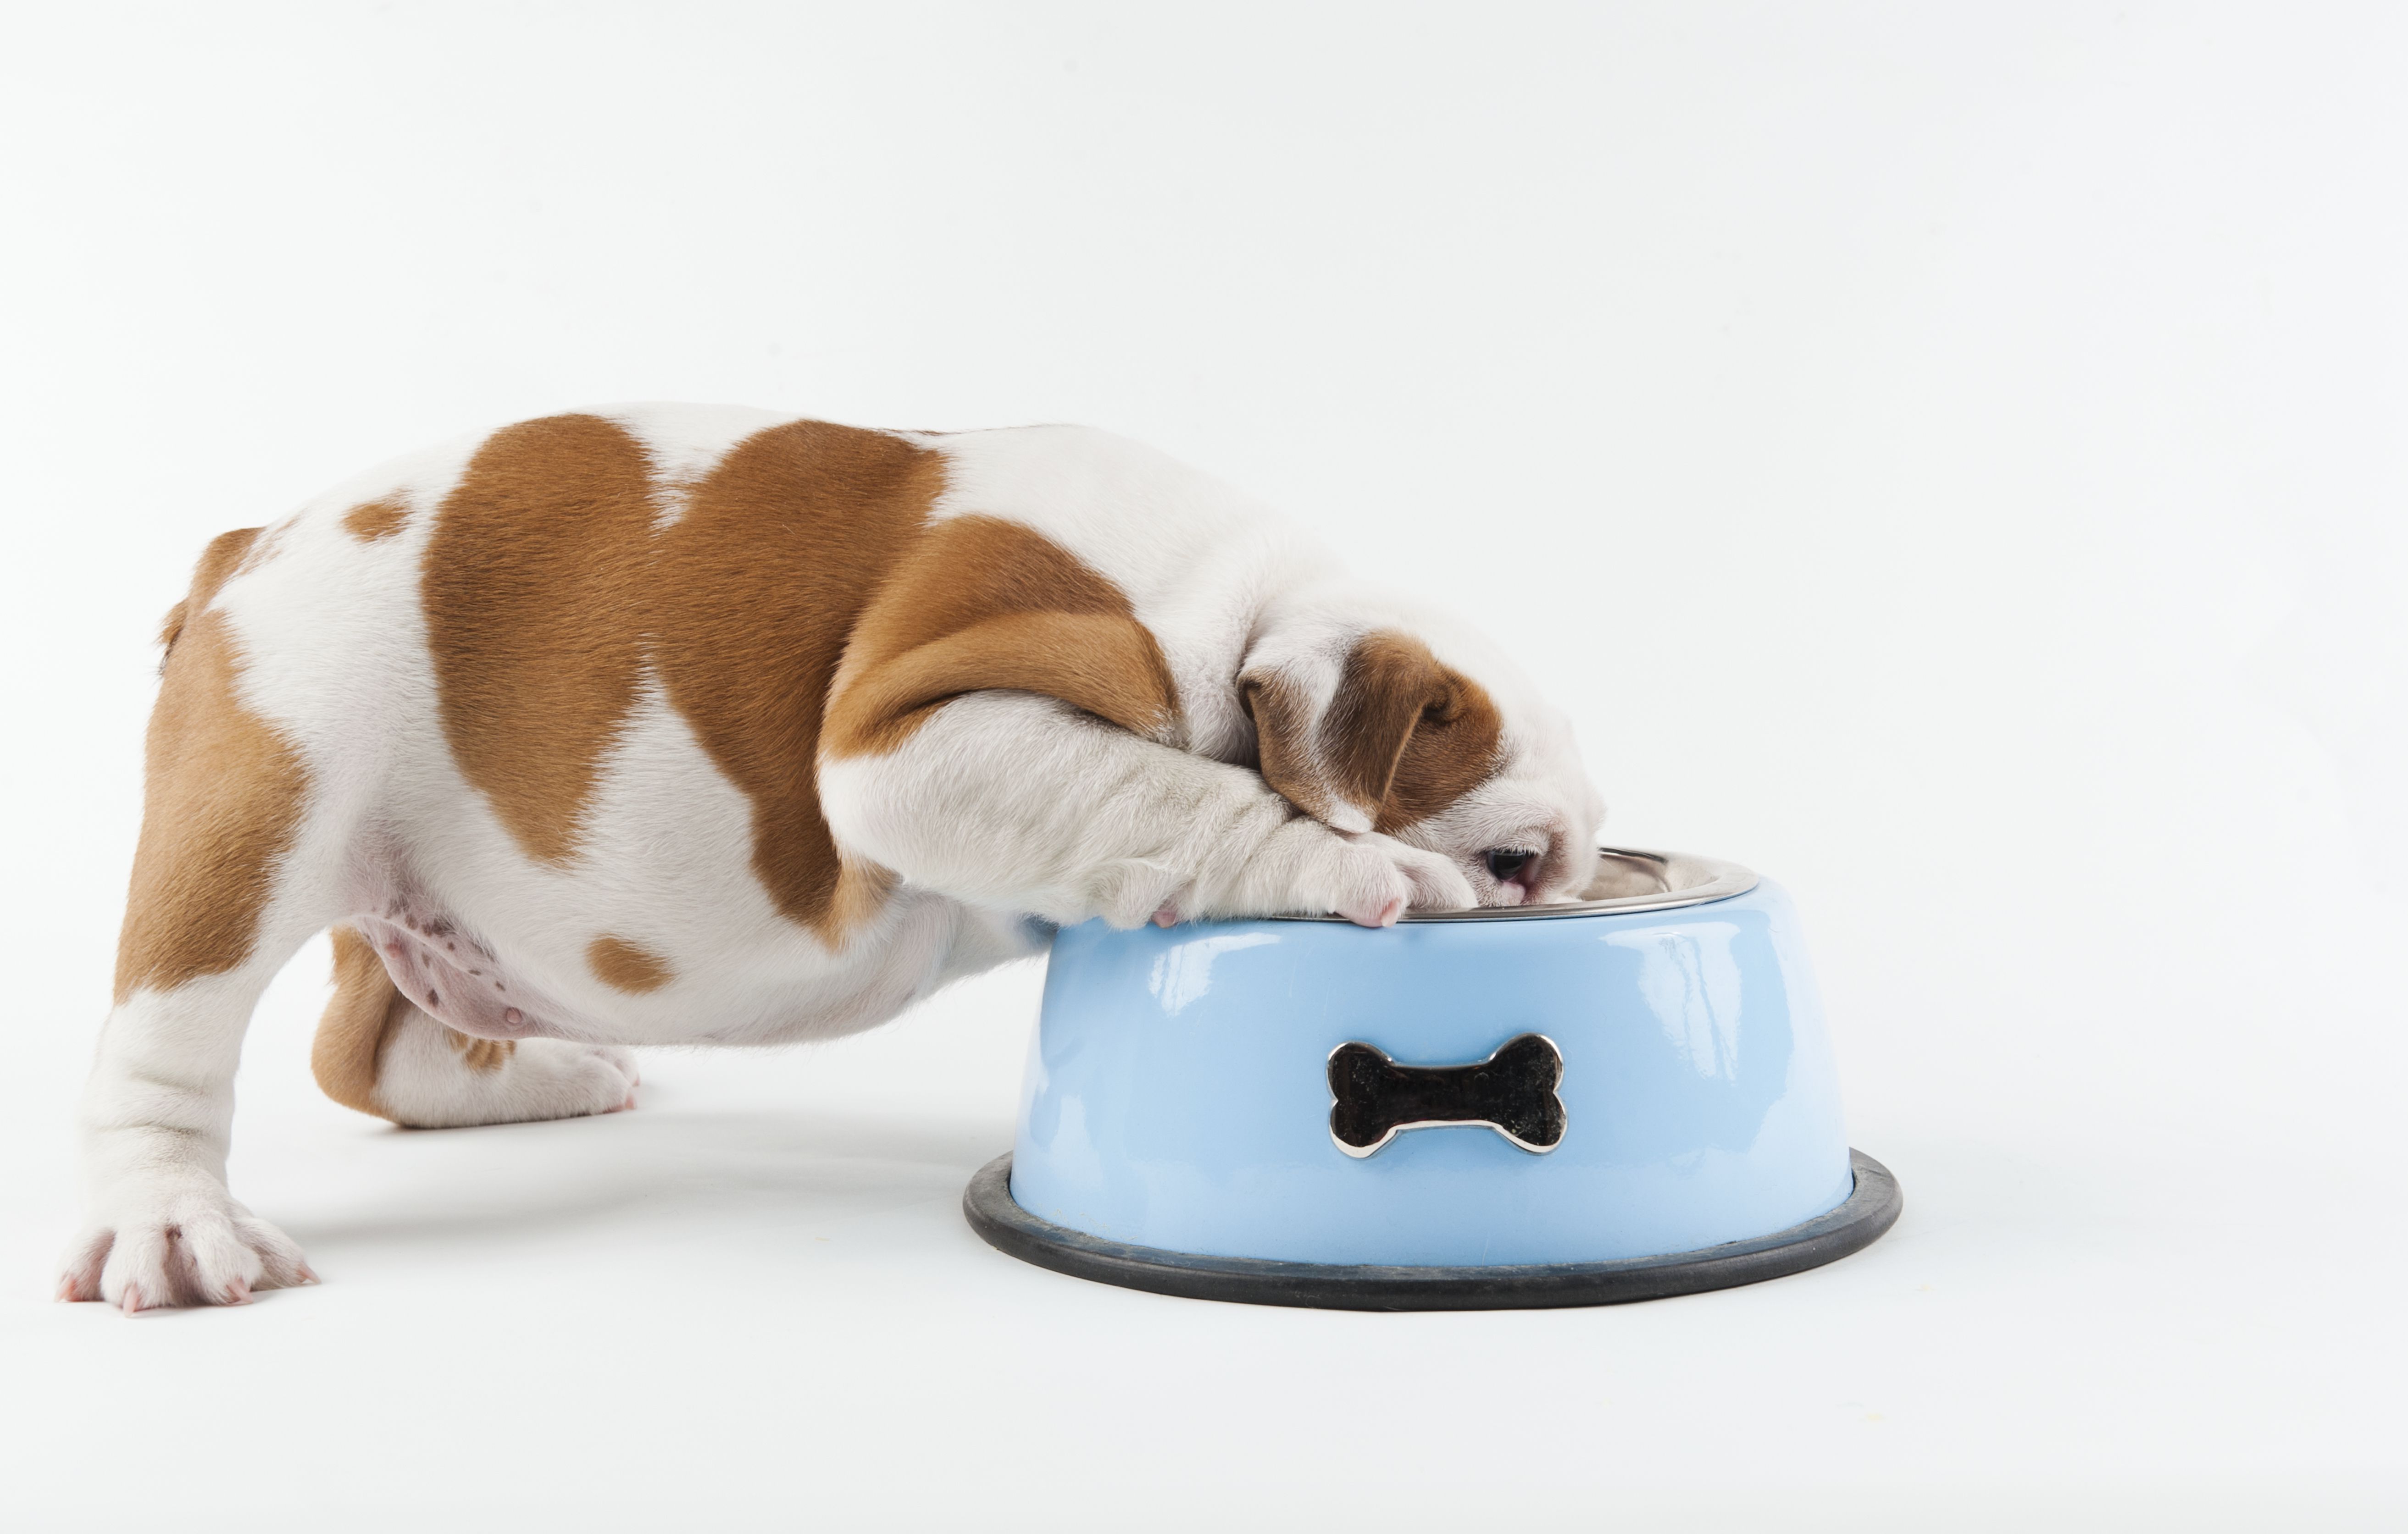 Bulldog puppy eating from dog bowl on white background